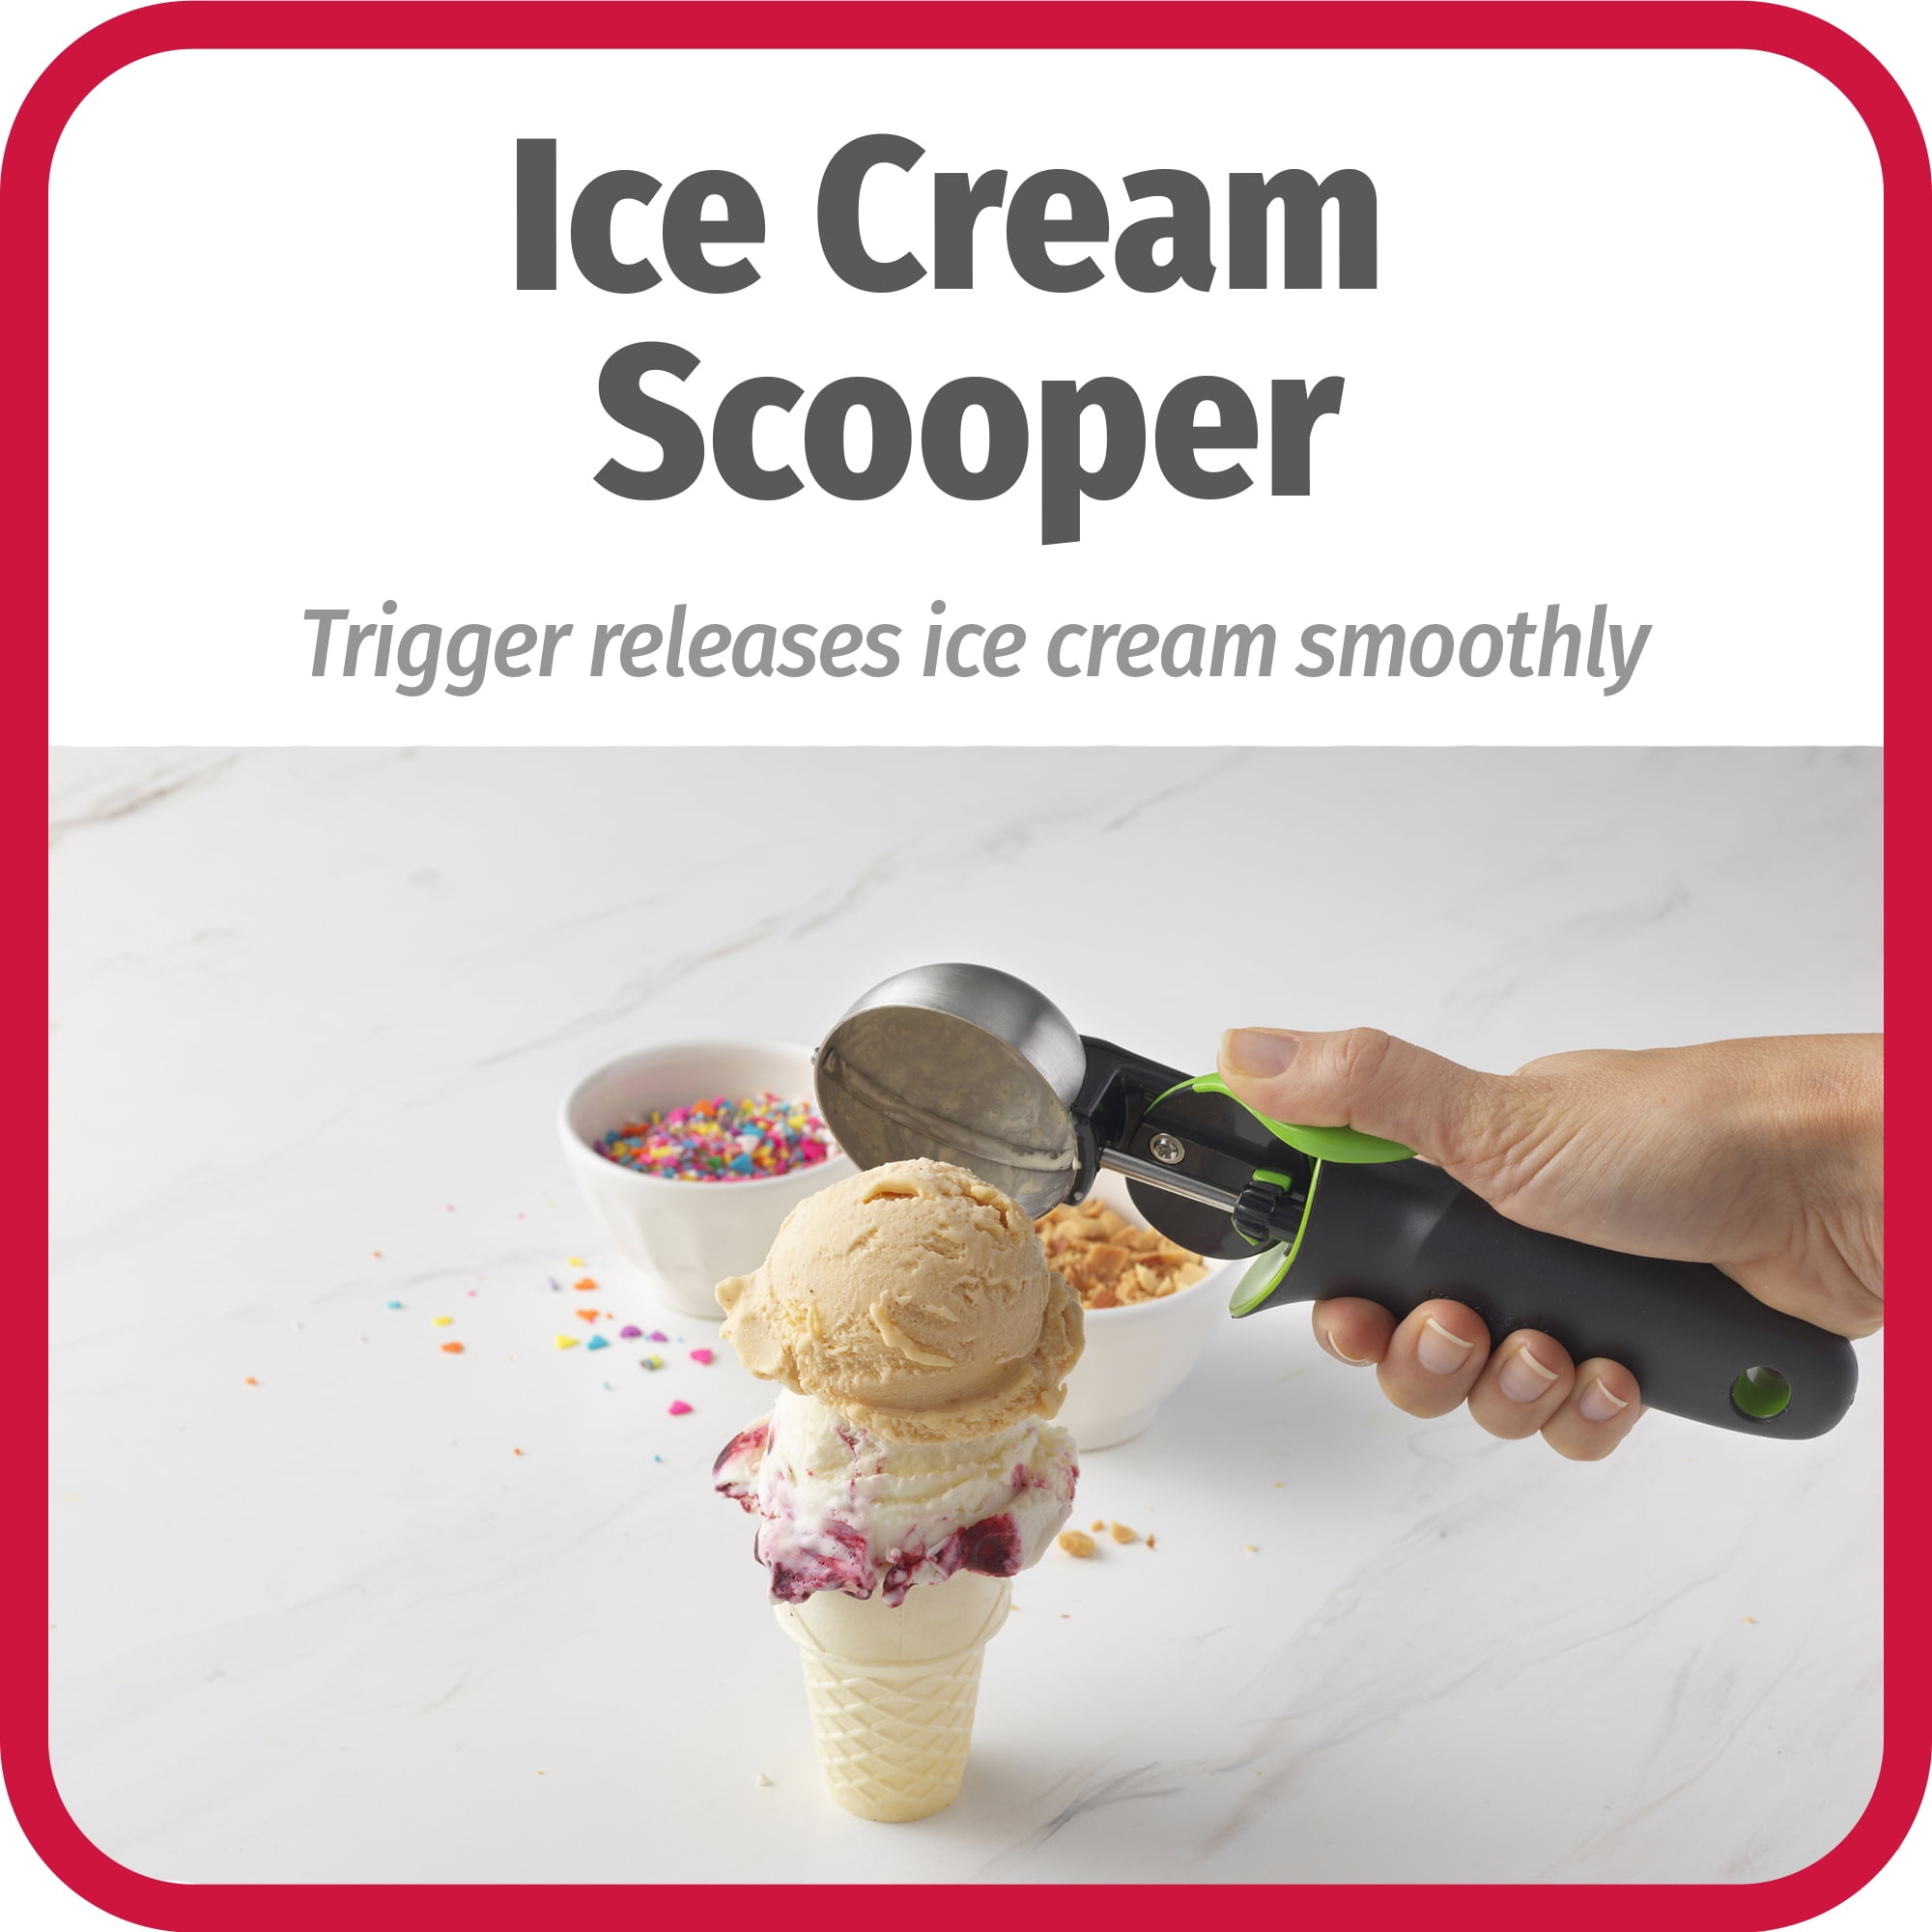 Promotional Personalized Scooper - Plastic Ice Cream Scoop $1.24